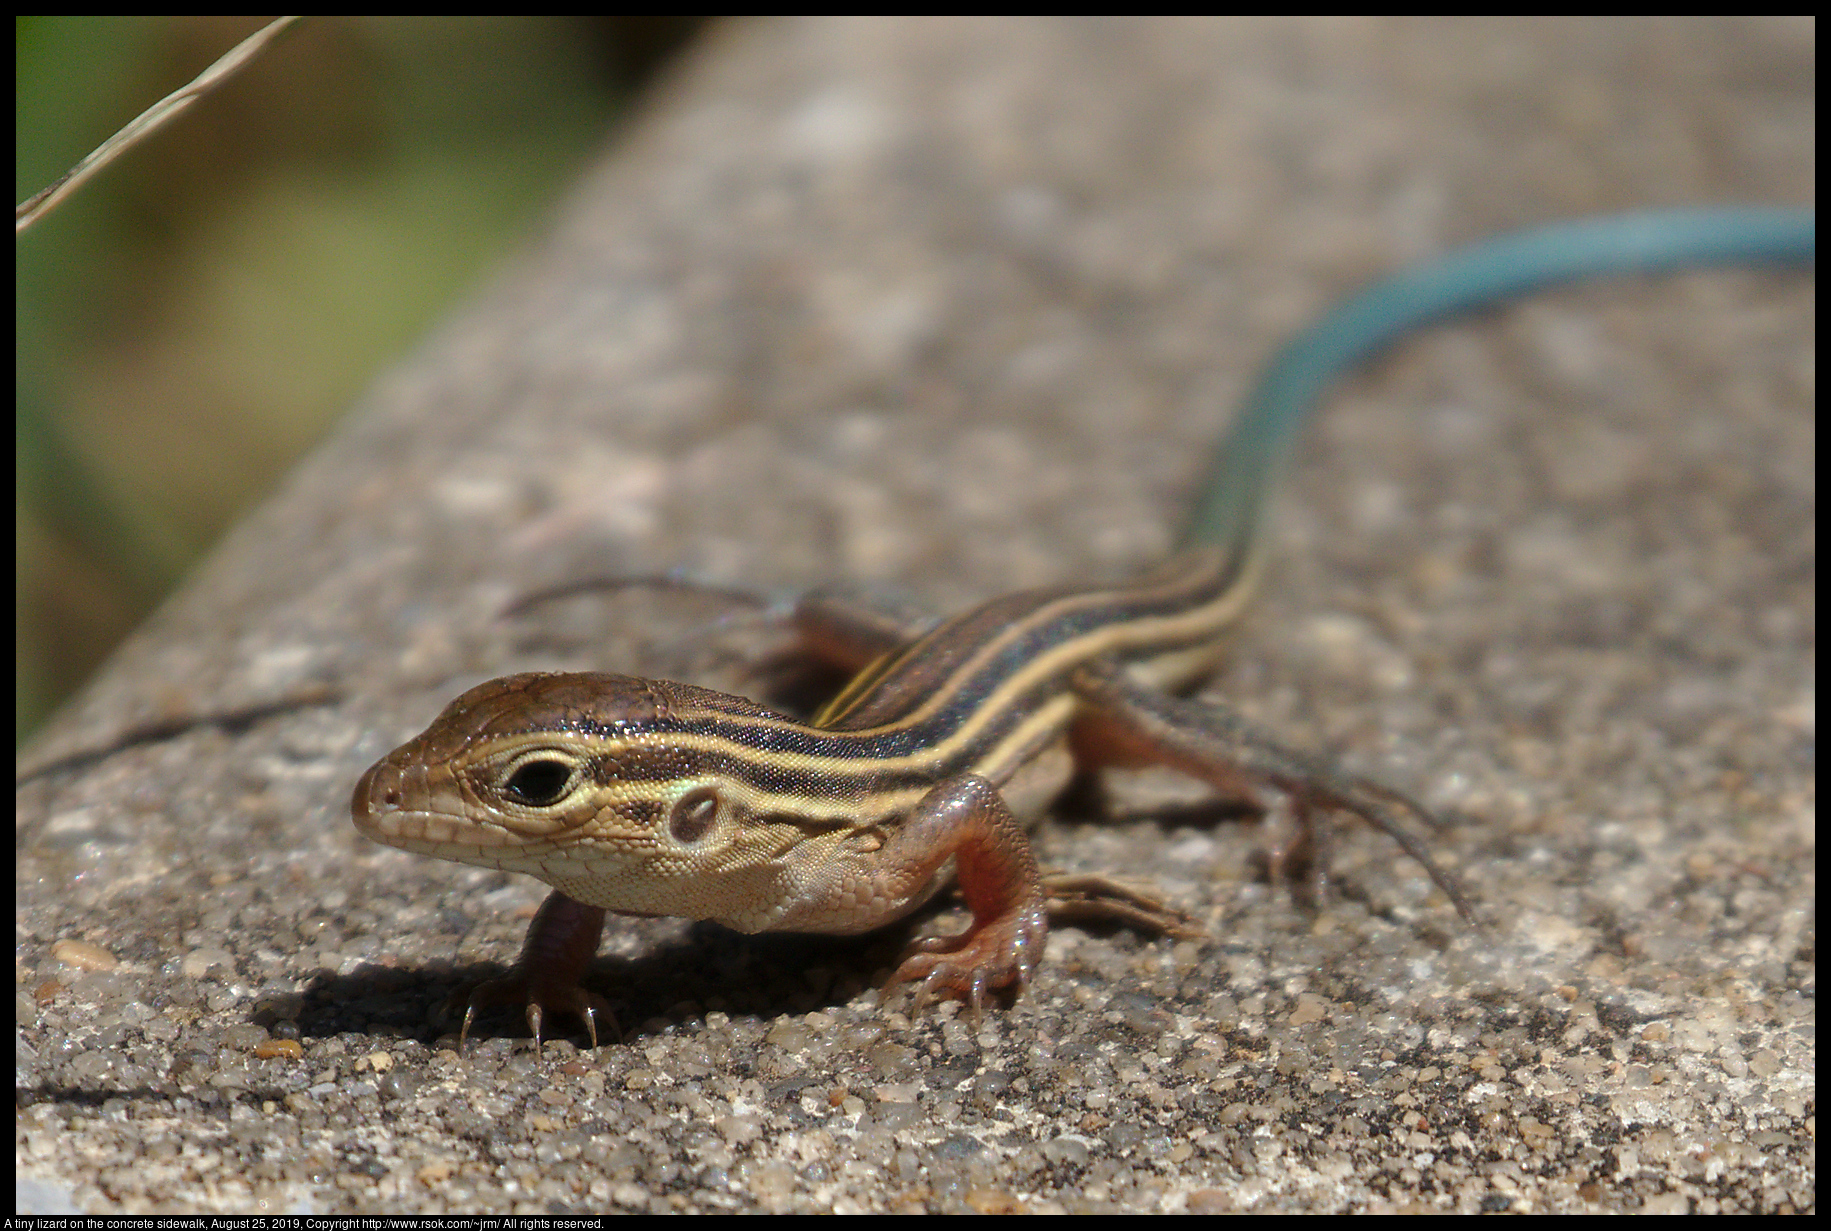 A tiny lizard on the concrete sidewalk, August 25, 2019